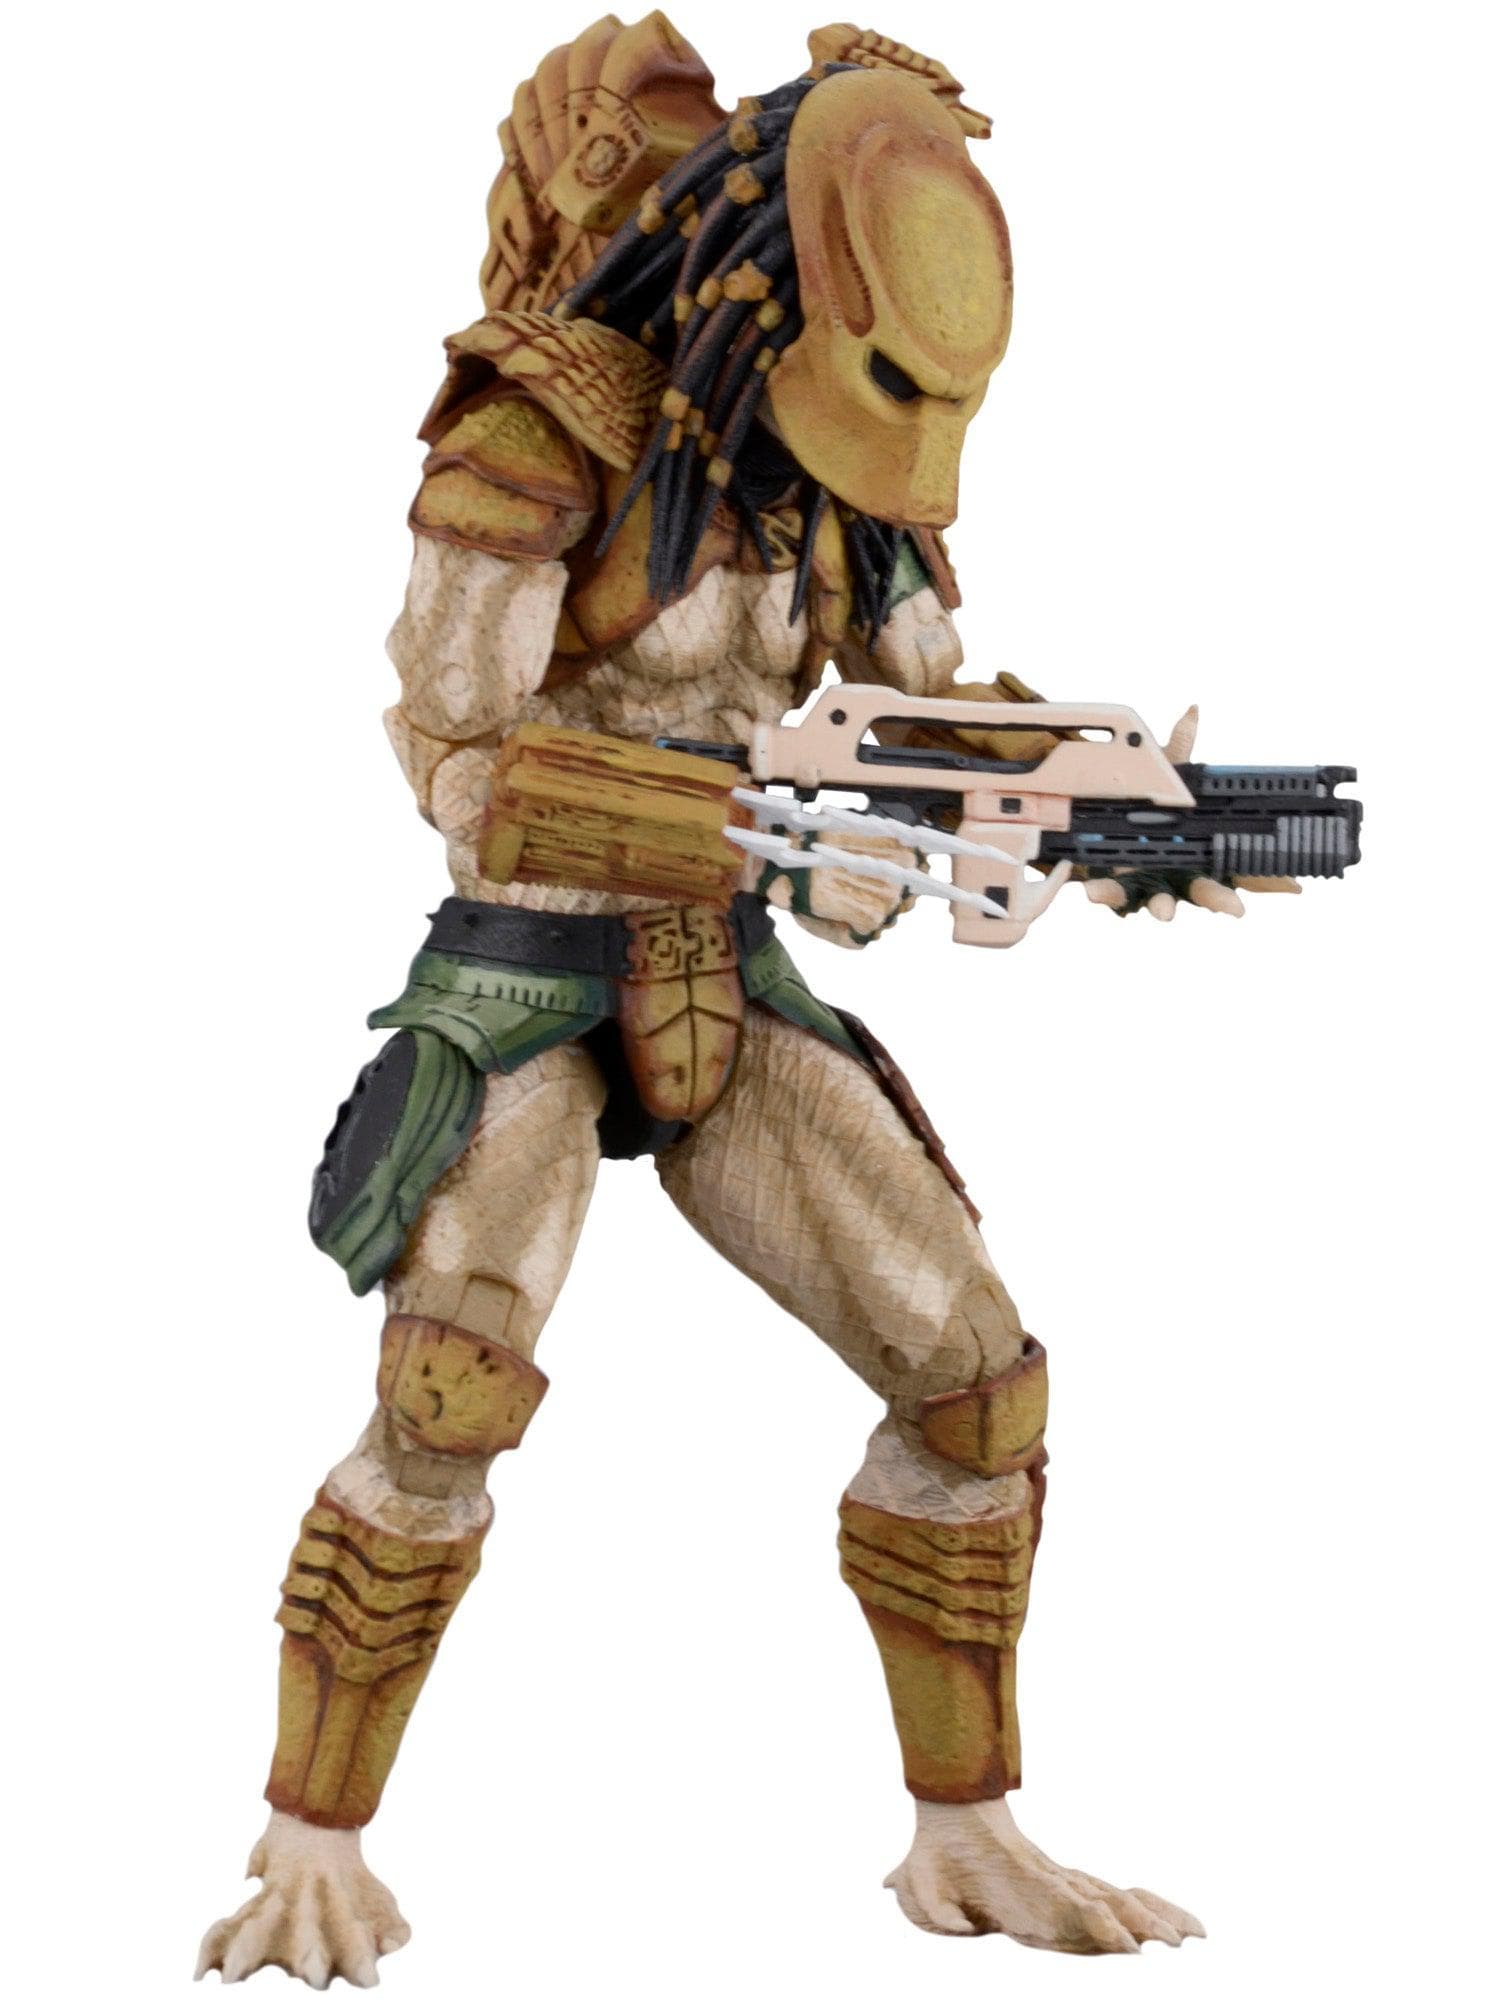 NECA - Alien vs Predator - 7" Scale Action Figure - Arcade Hunter Predator - costumes.com